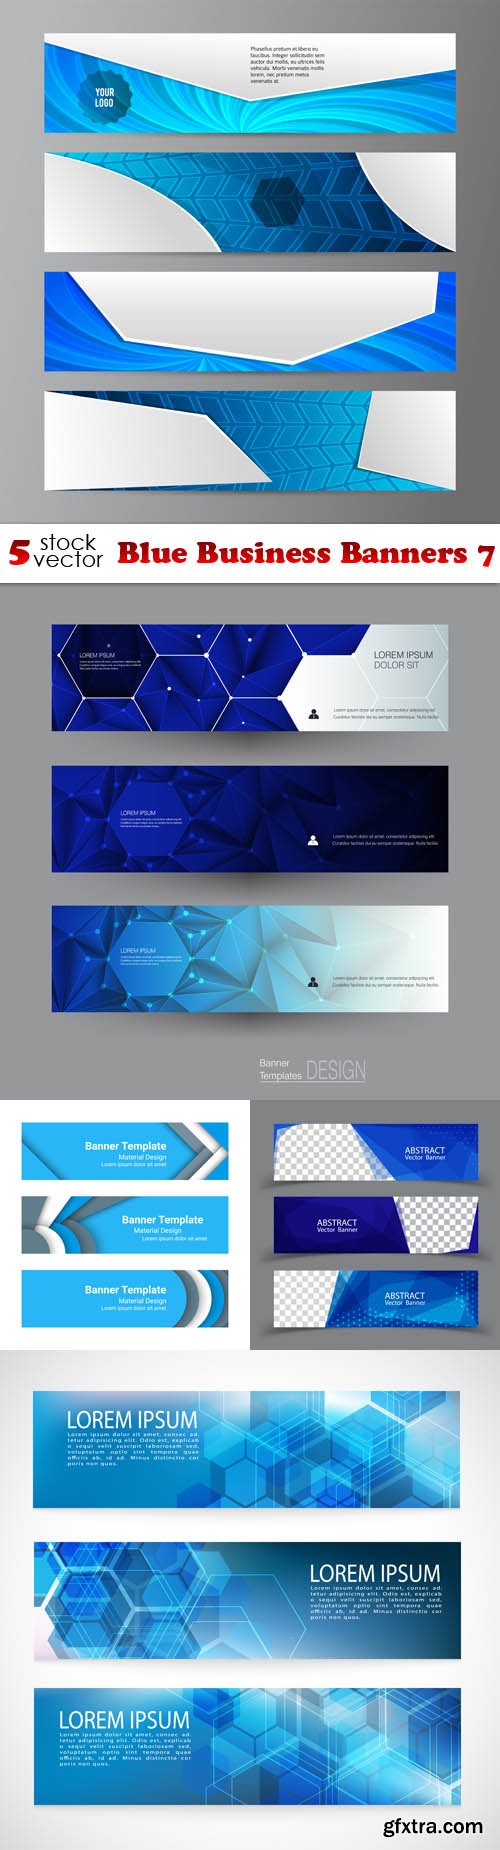 Vectors - Blue Business Banners 7